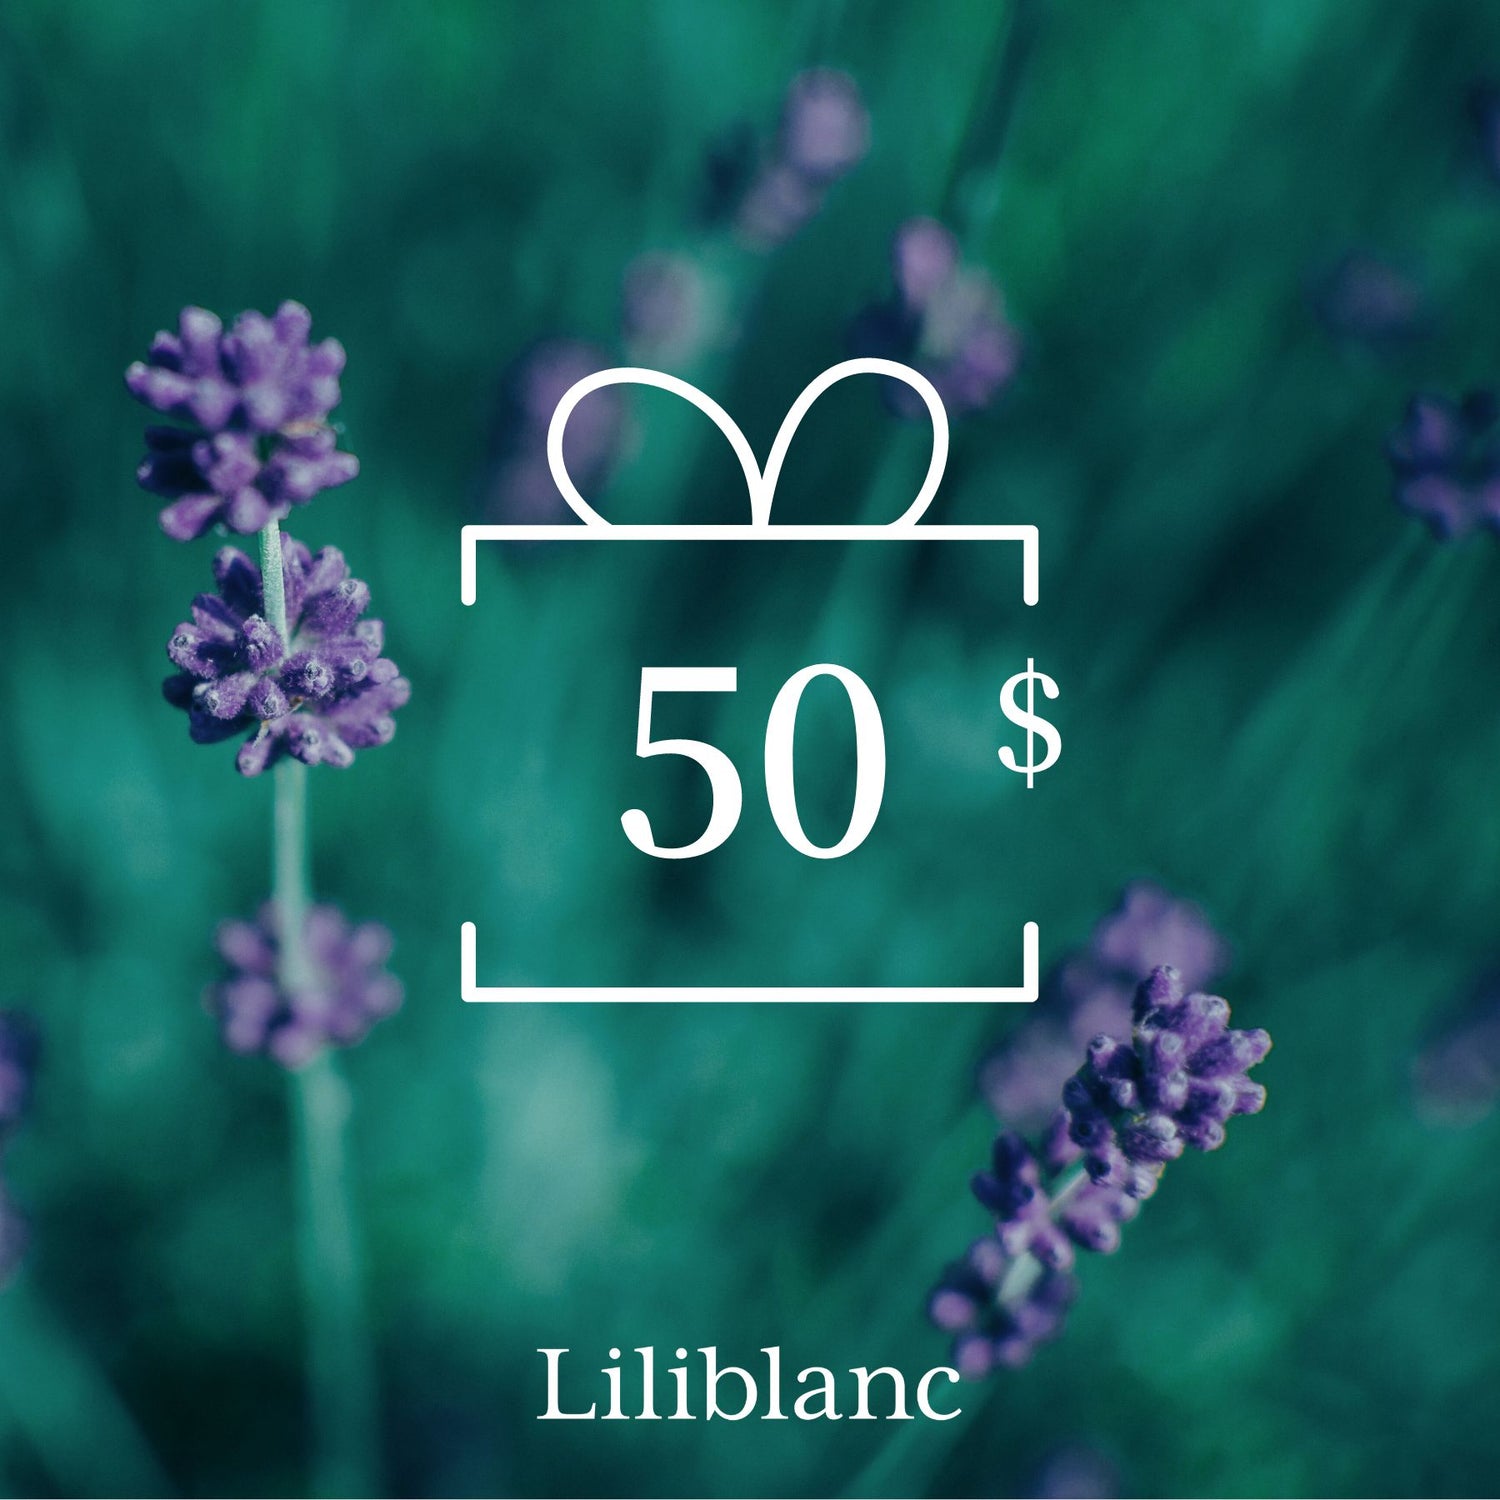 Liliblanc gift card $50